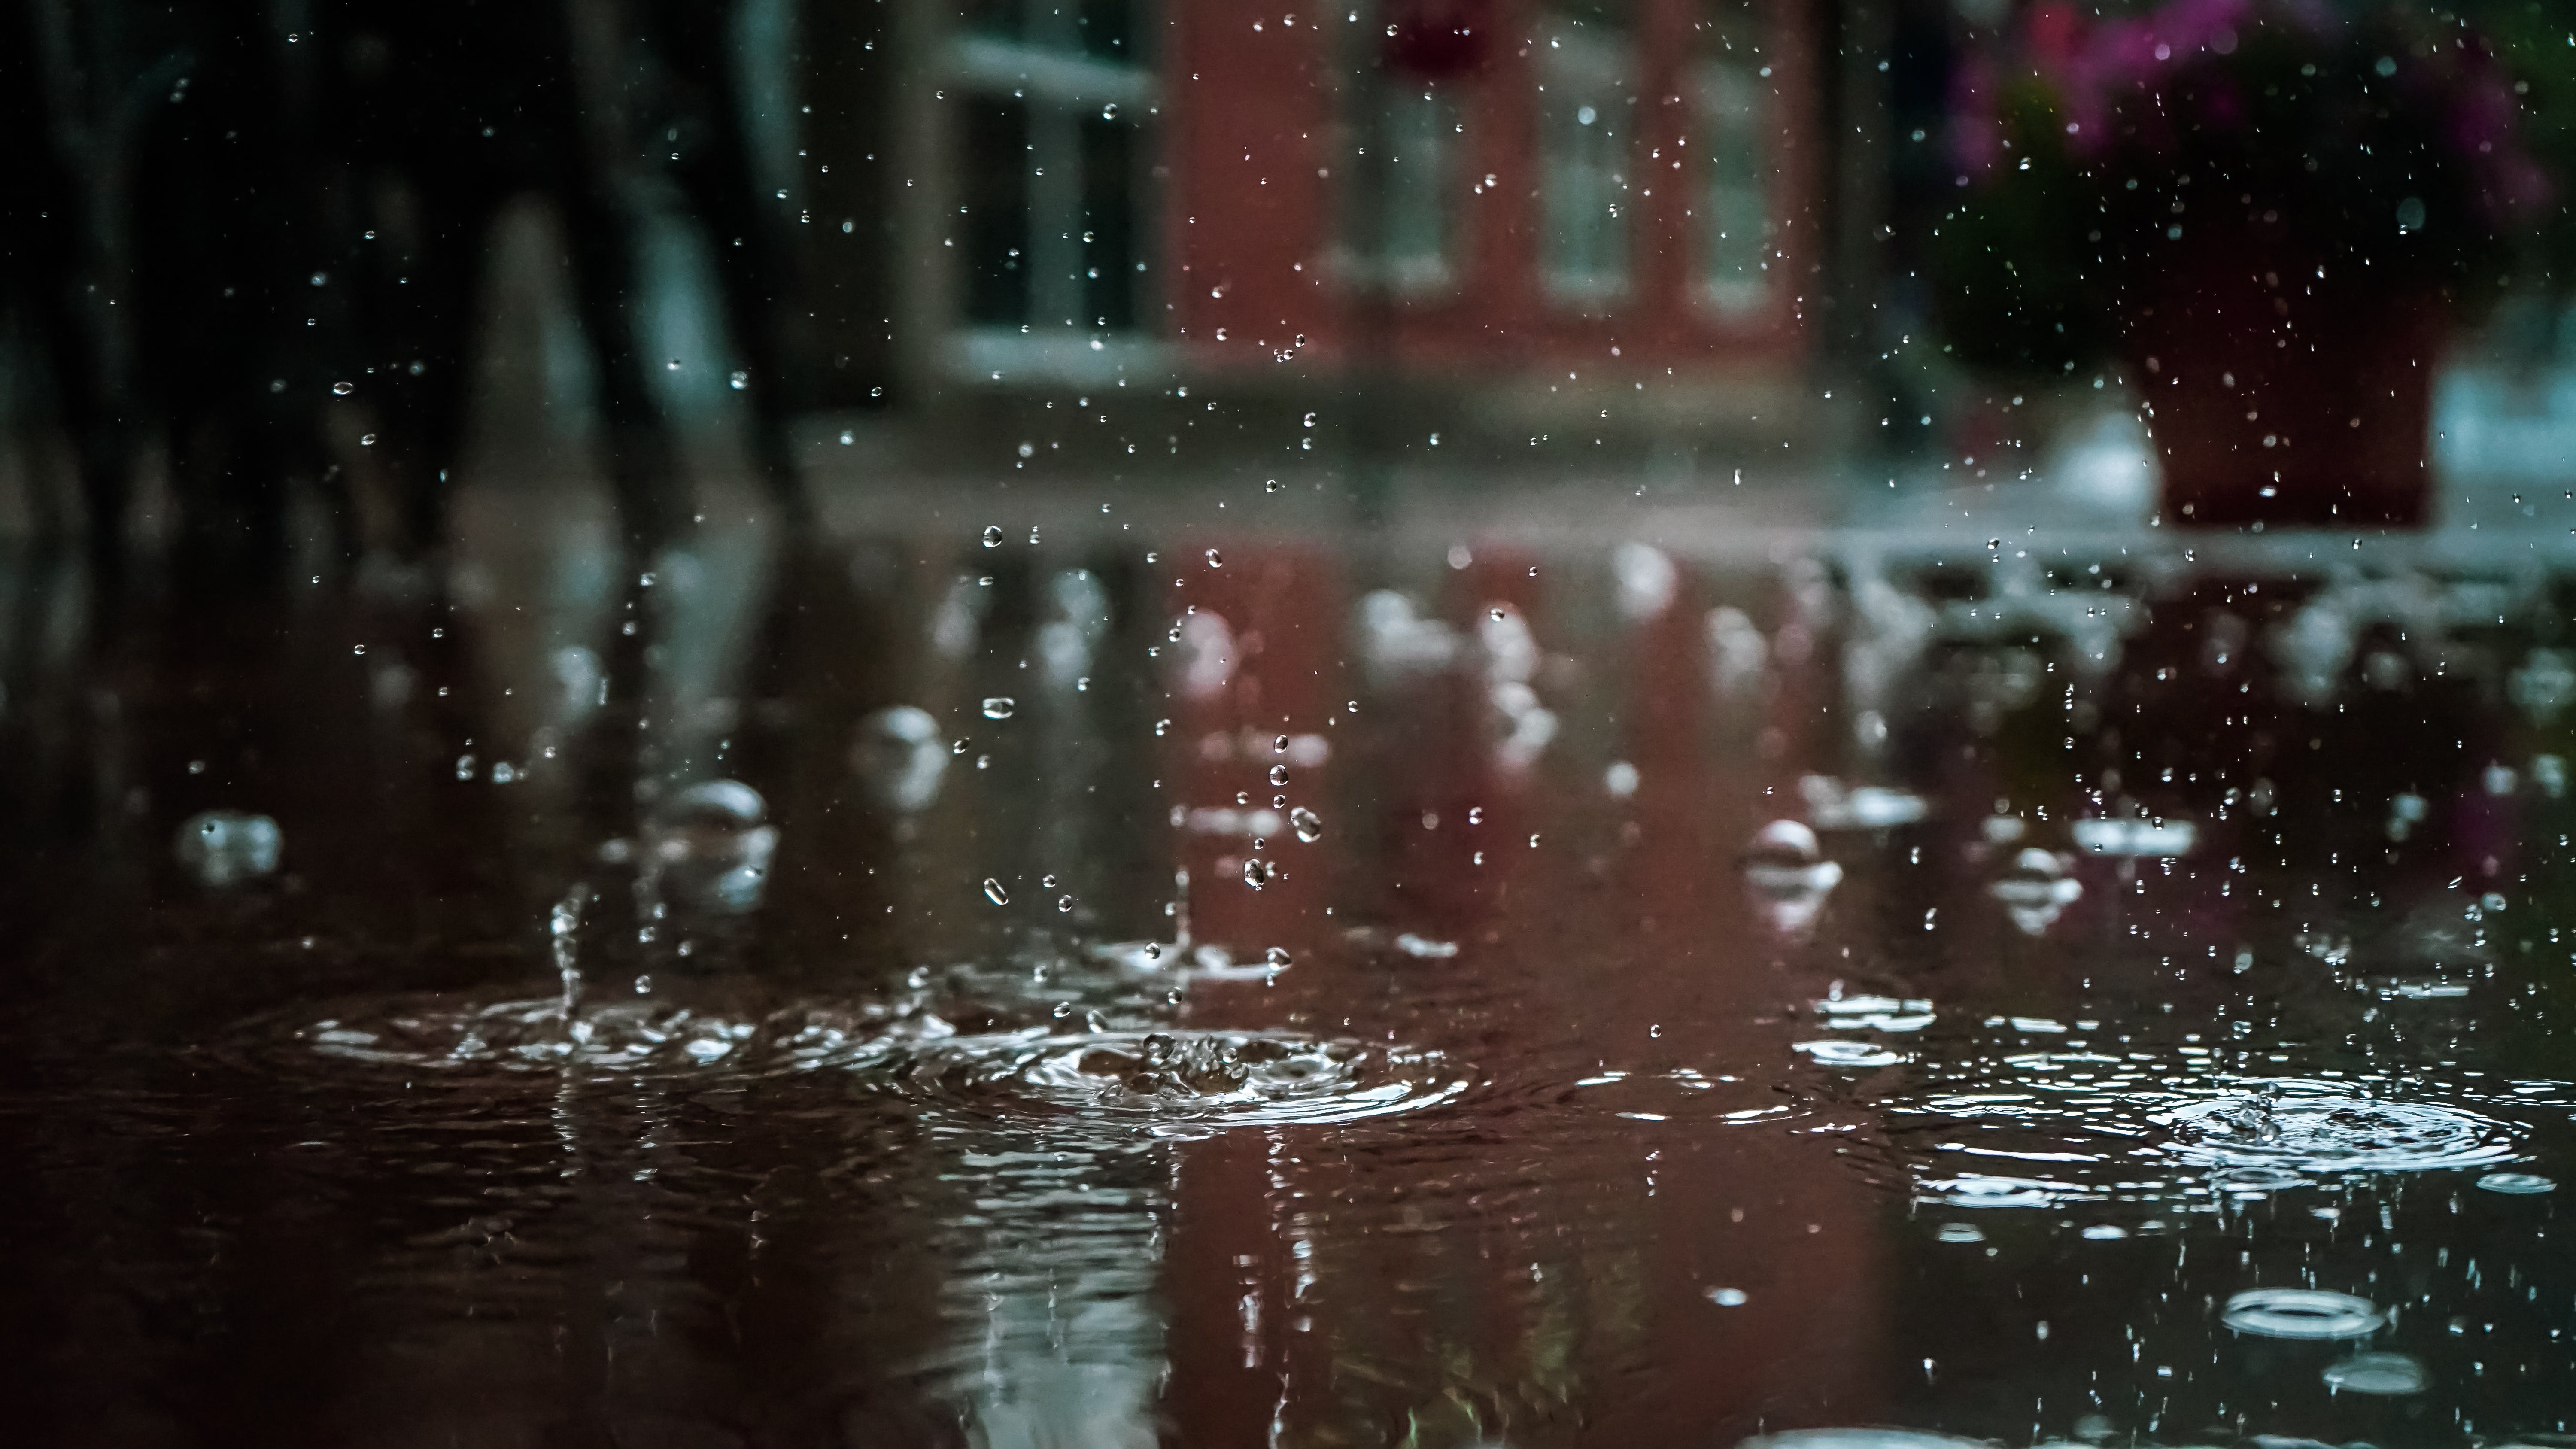 Raindrops splashing ripples into a puddle onto asphalt ground cover